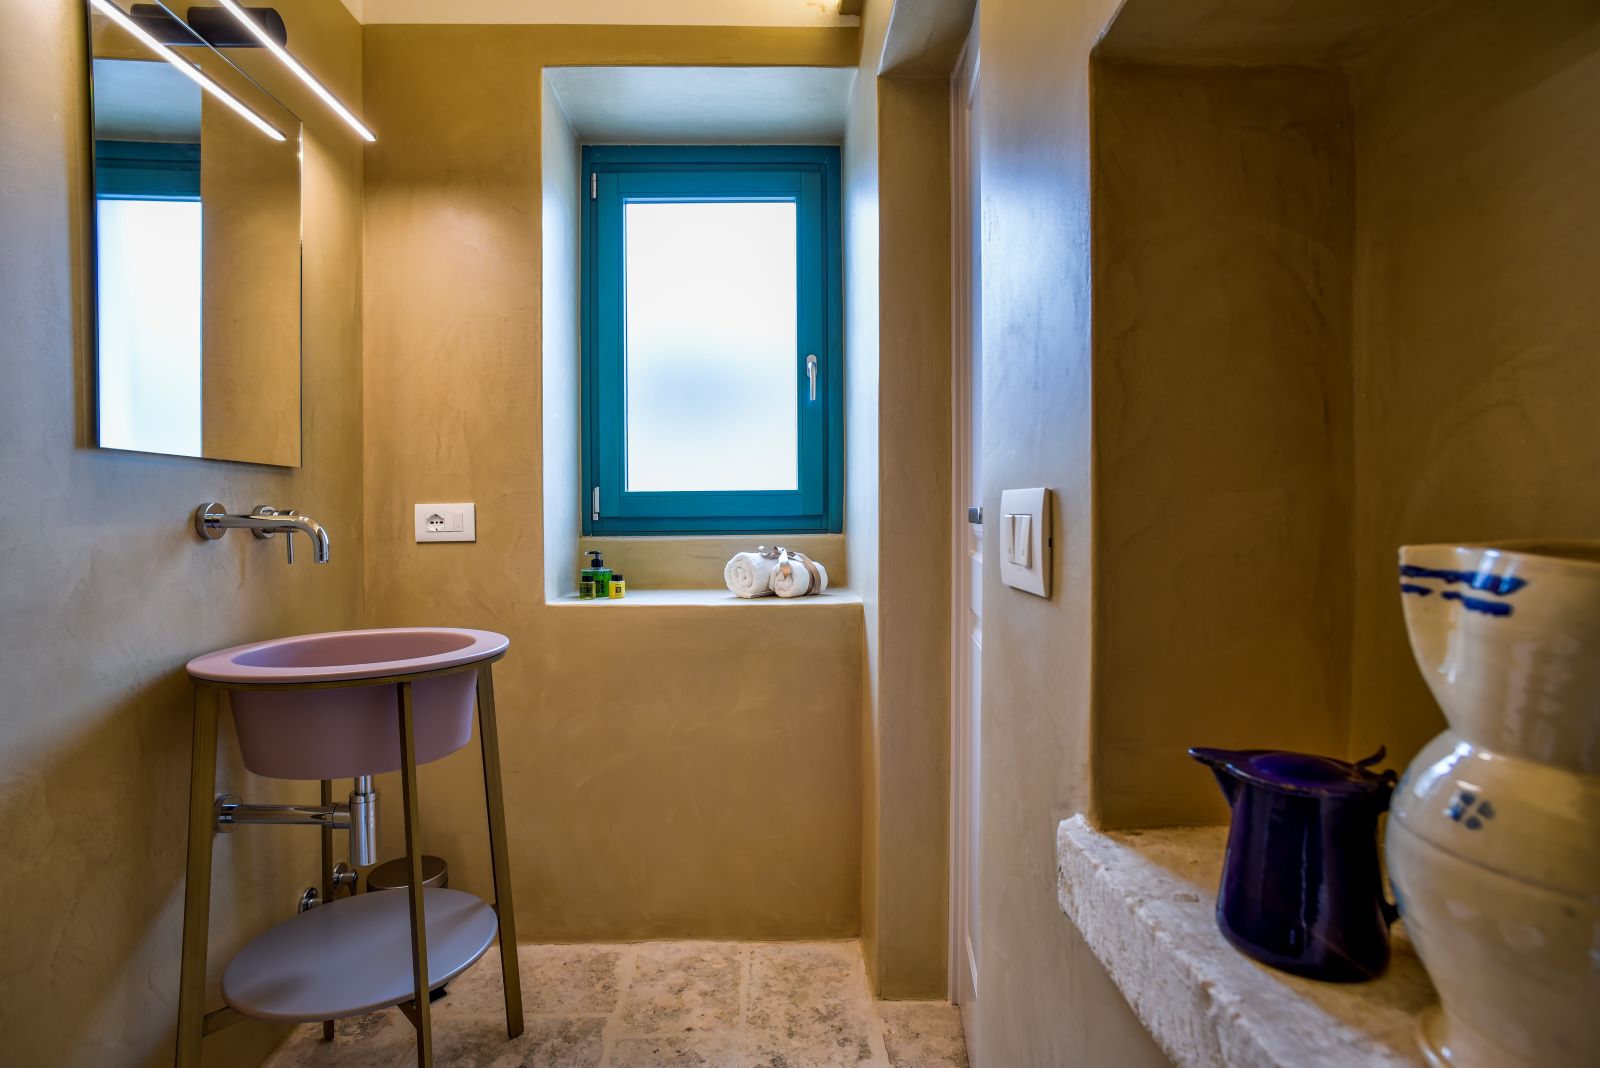 Borgo Aratico, Ceramica Cielo furnishes the bathrooms of the farmhouse